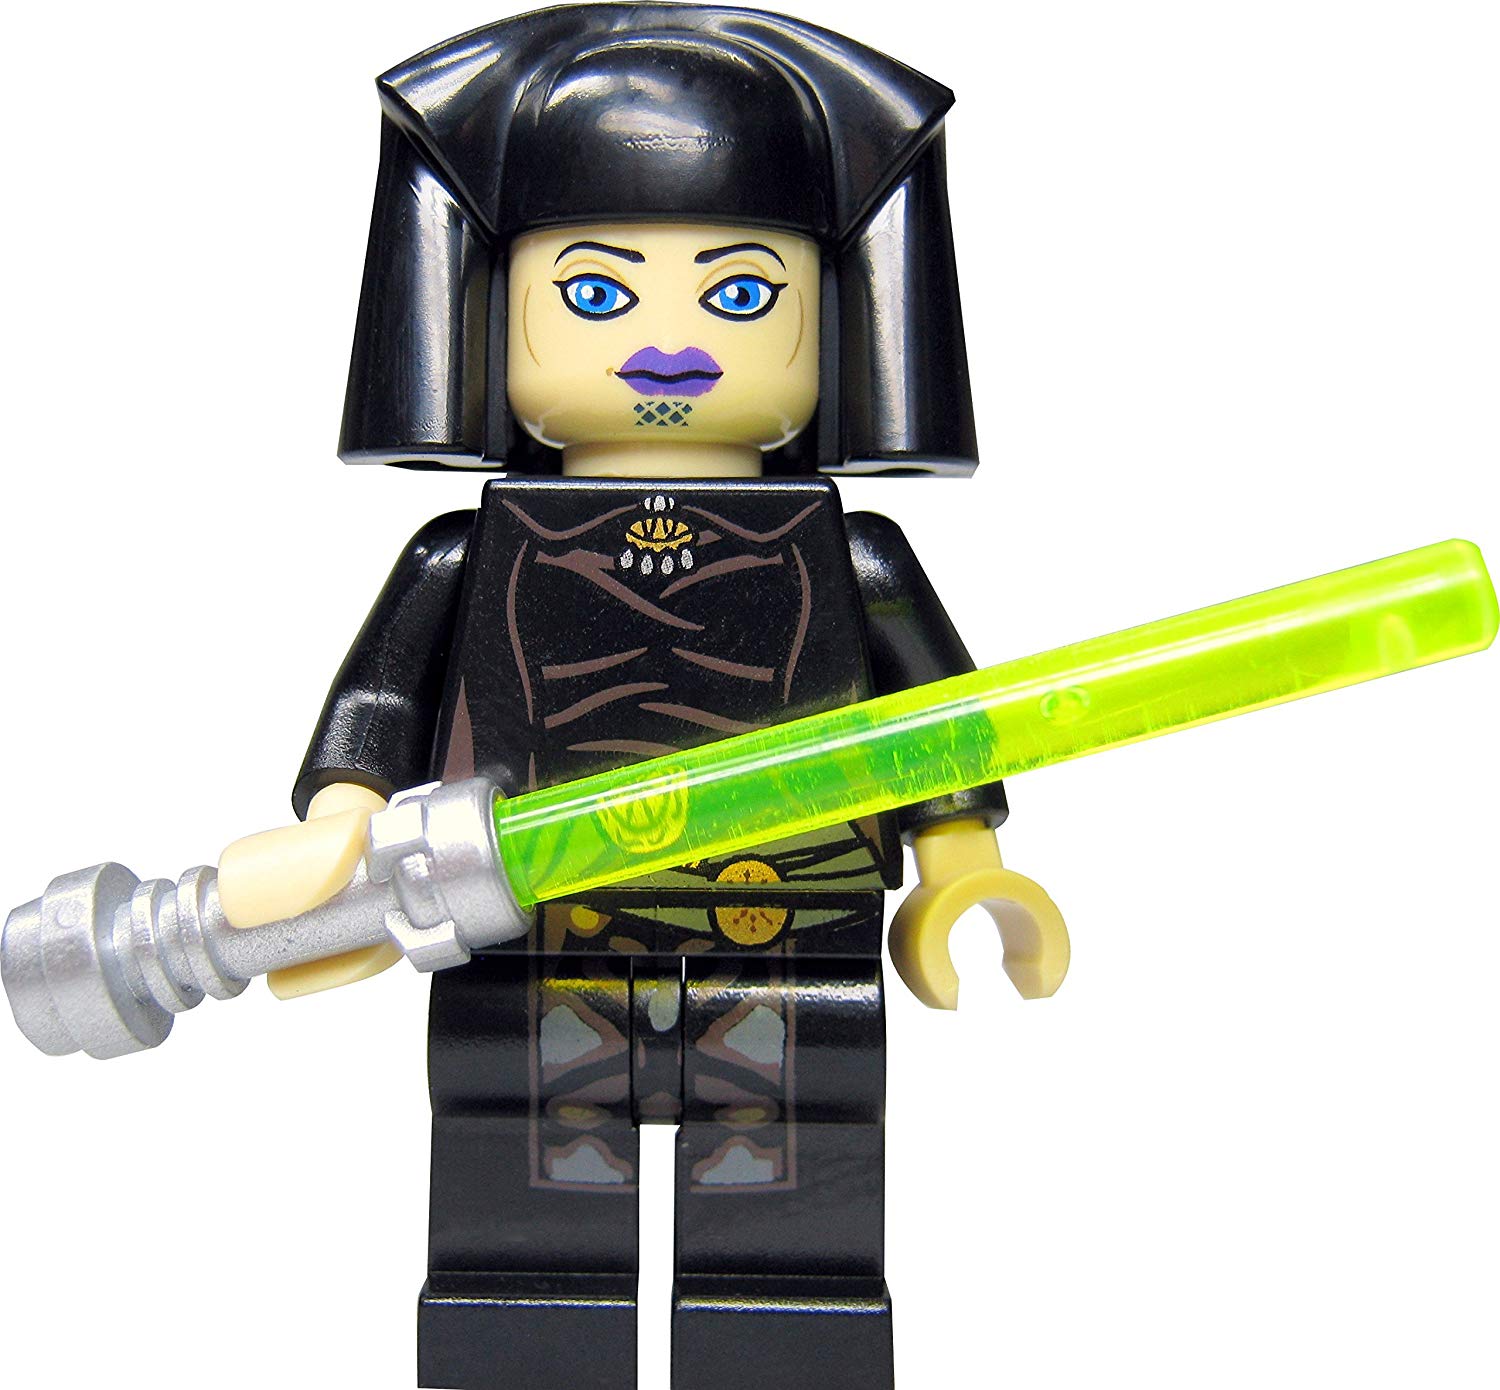 Lego Star Wars: Luminara Unduli Minifigure